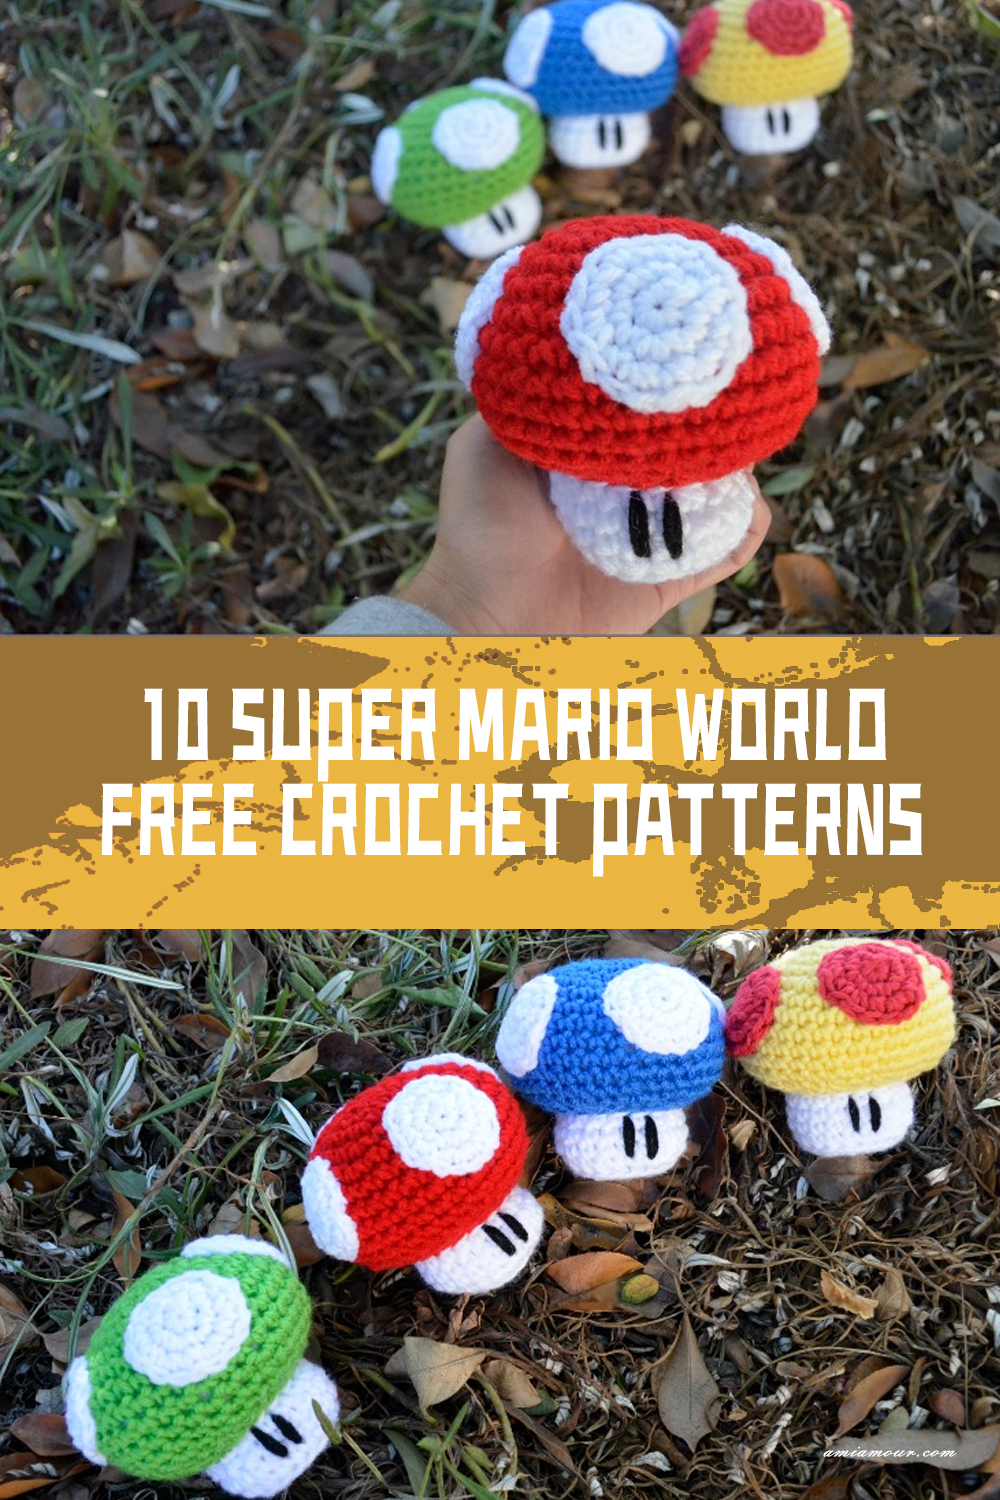 10 Super Mario World FREE Crochet Patterns